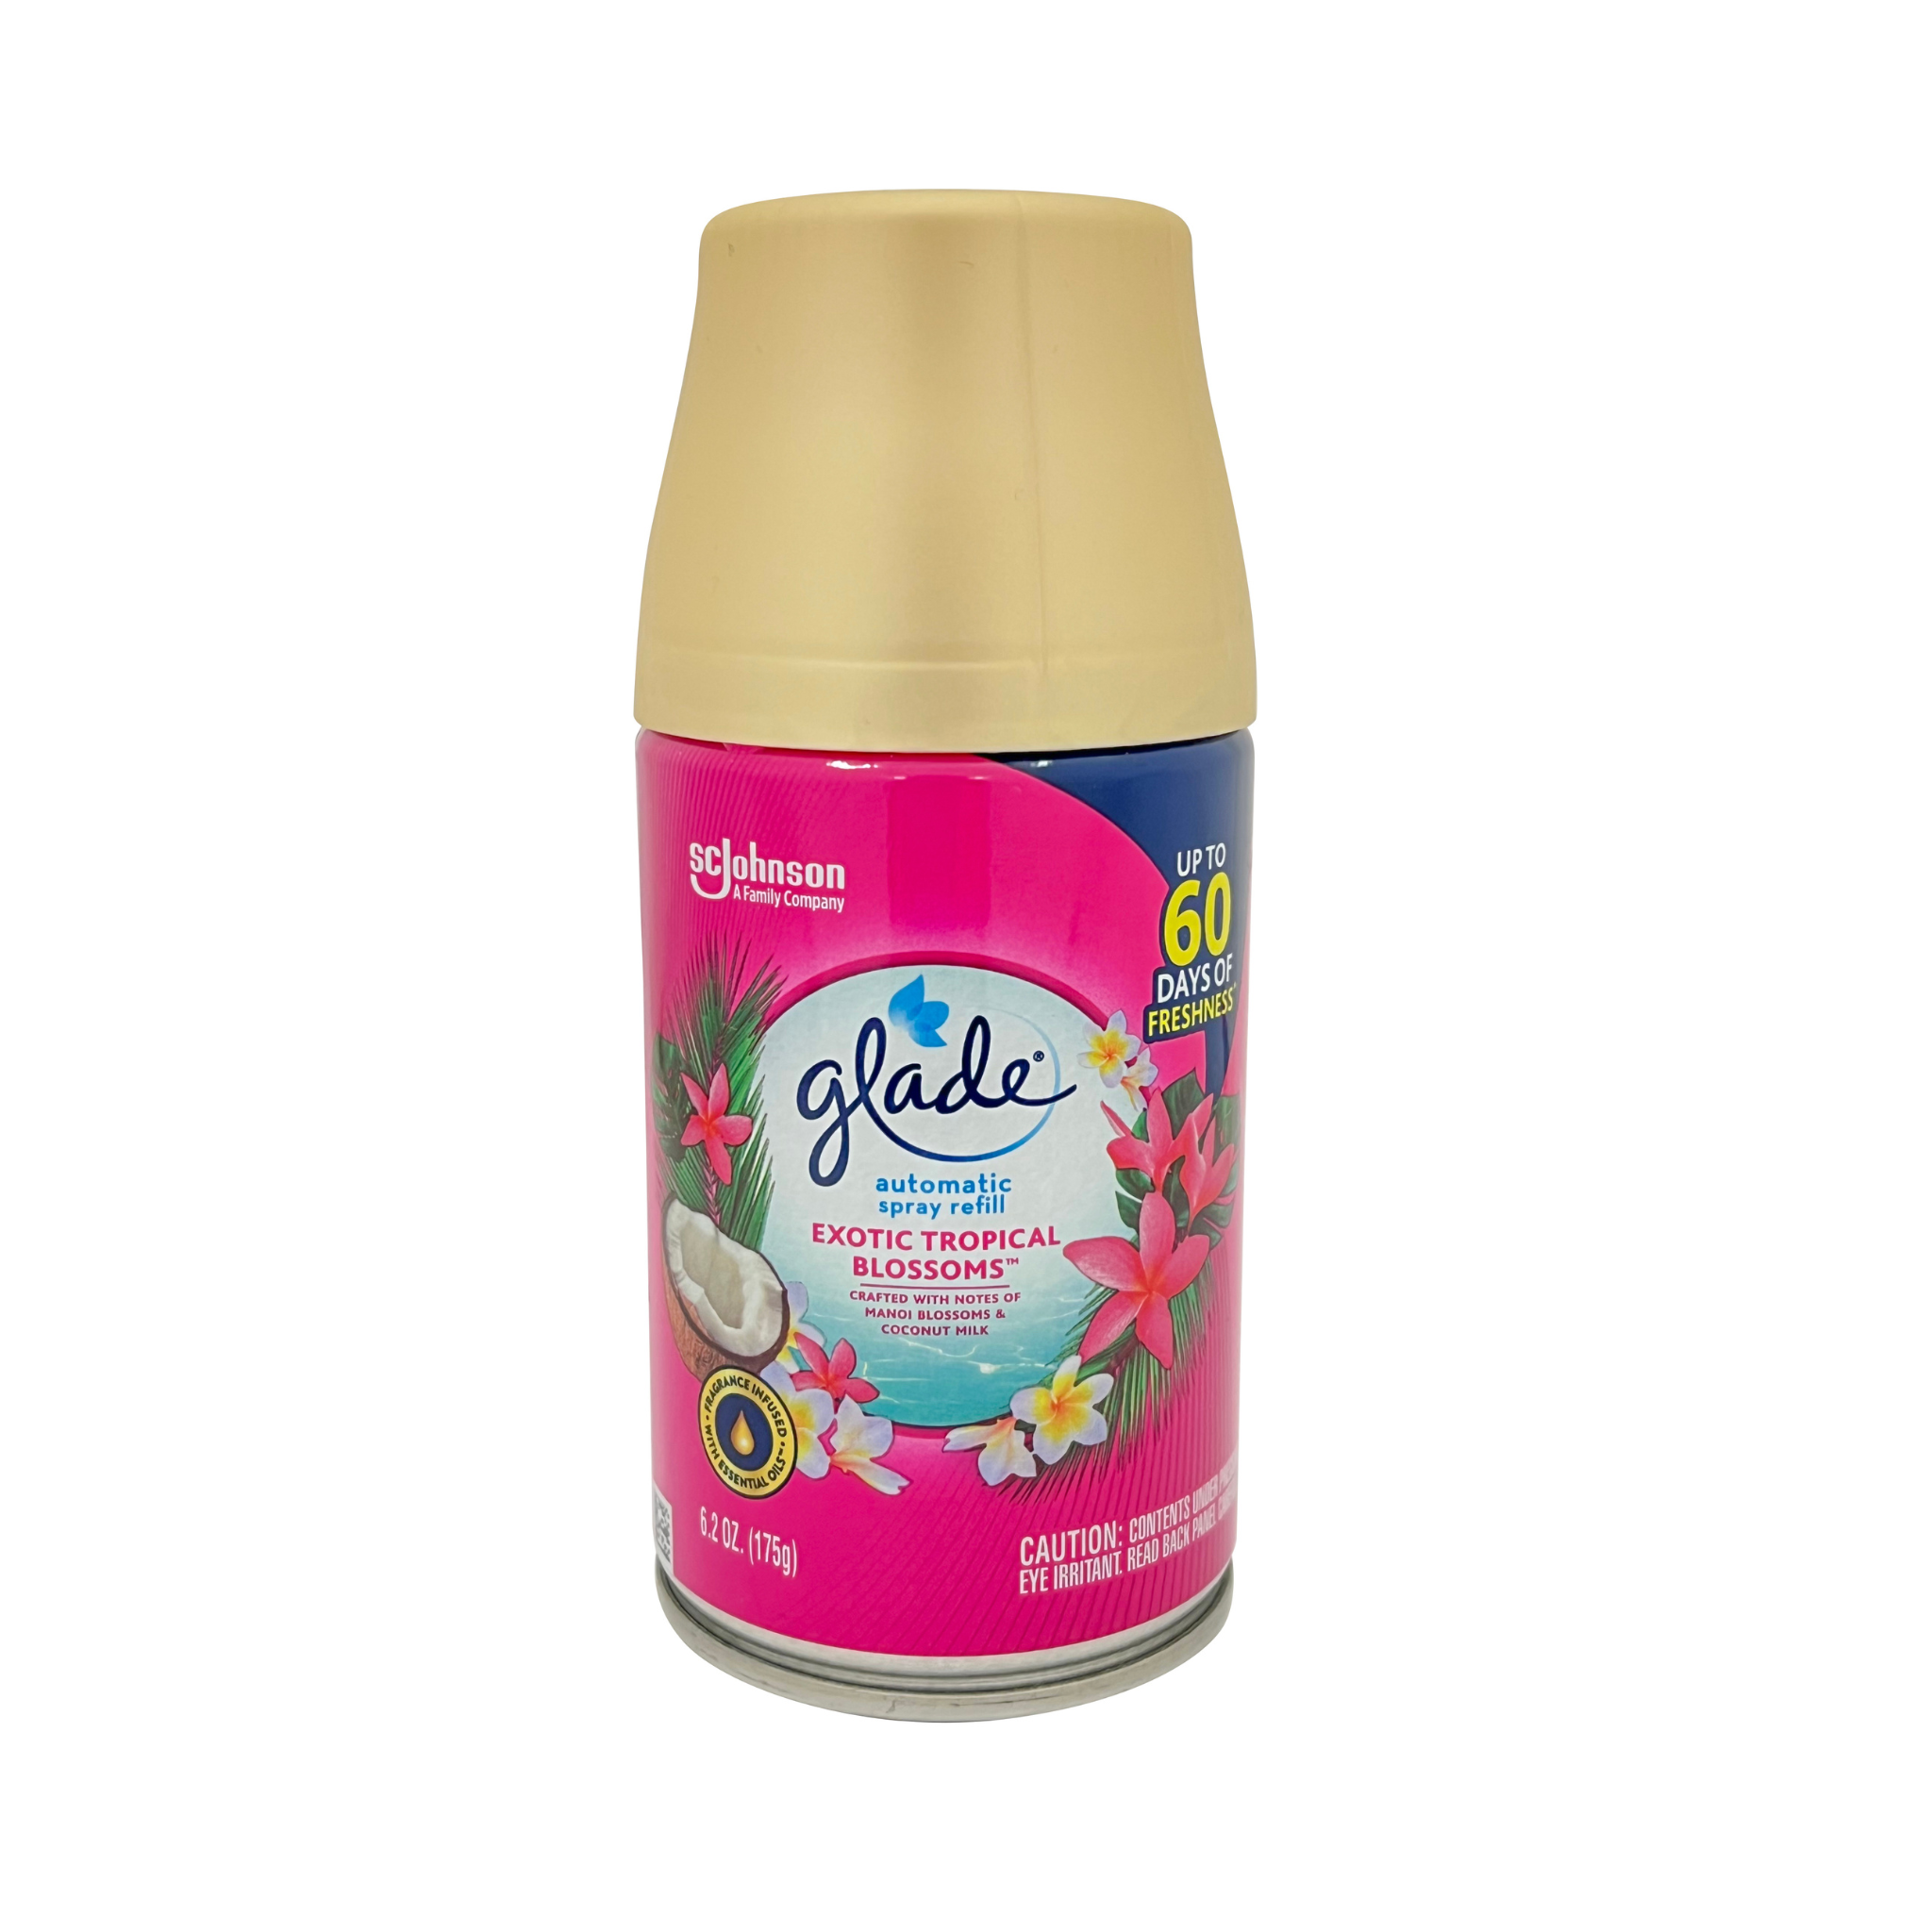 Glade Automatic Spray Refill Air Freshener 6.2 oz - Exotic, Tropical B